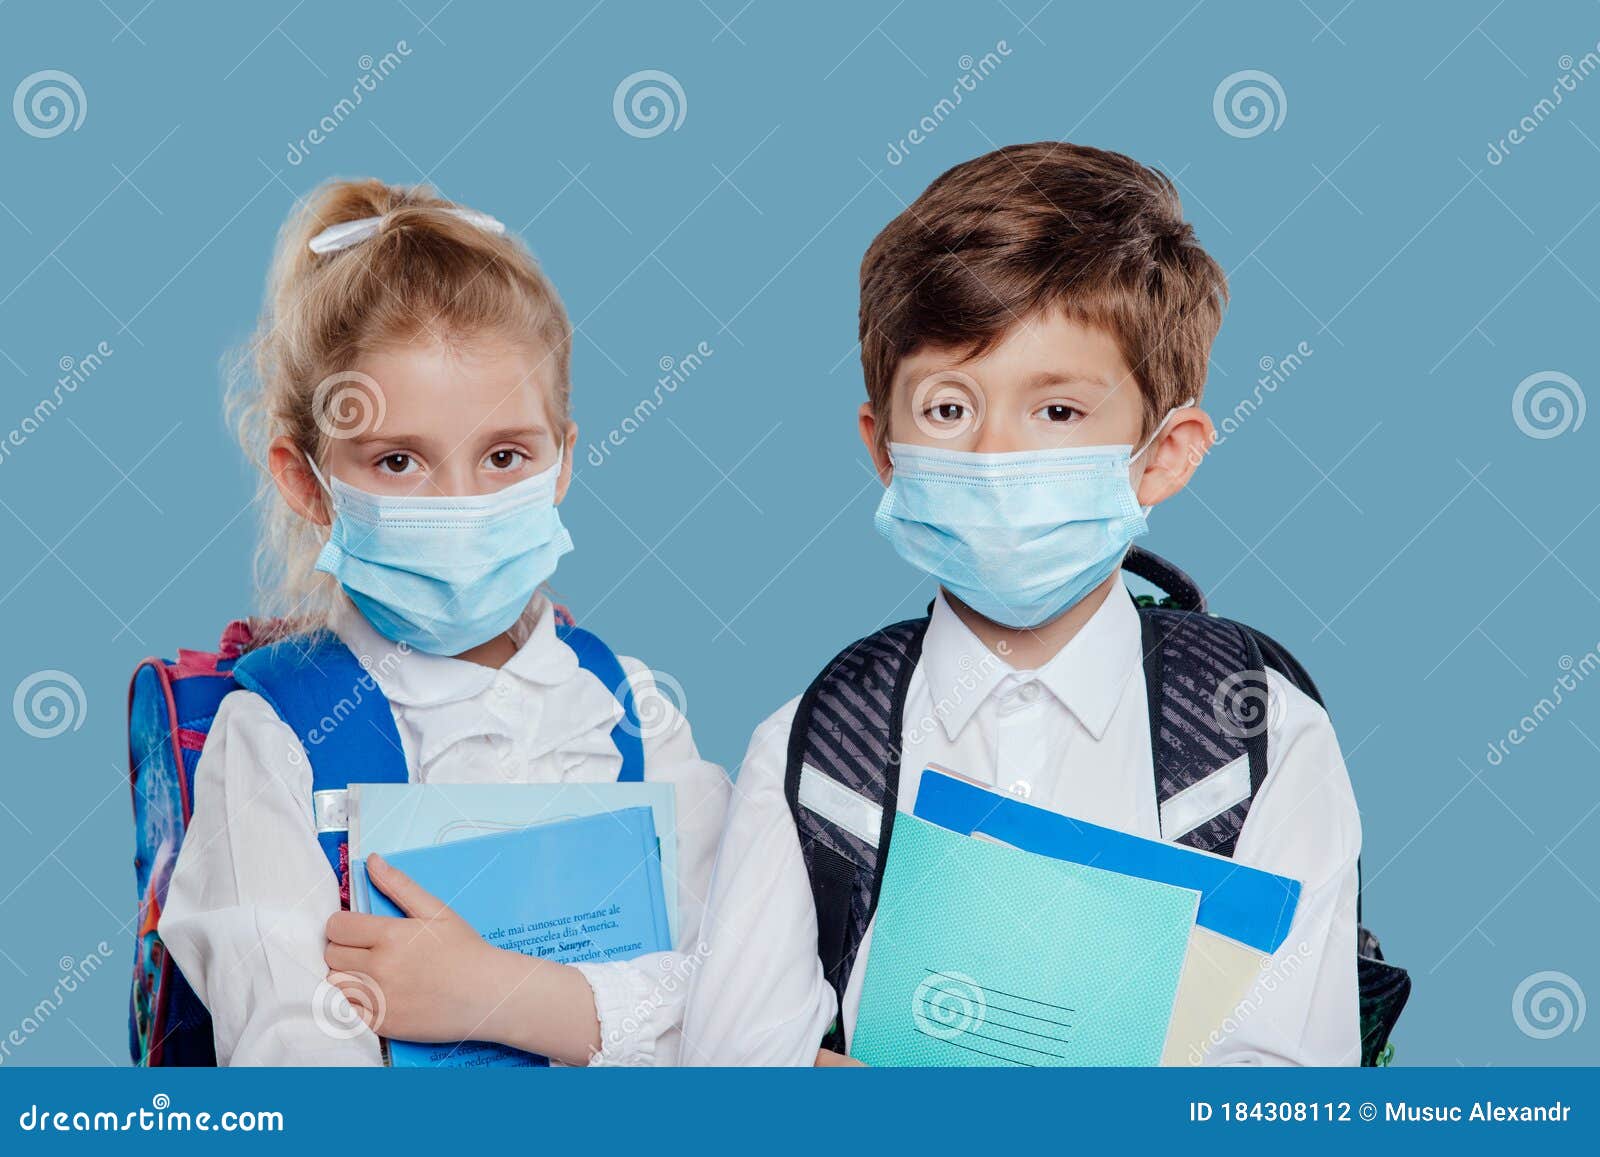 schoolchildren in face masks with copybooks during coronavirus